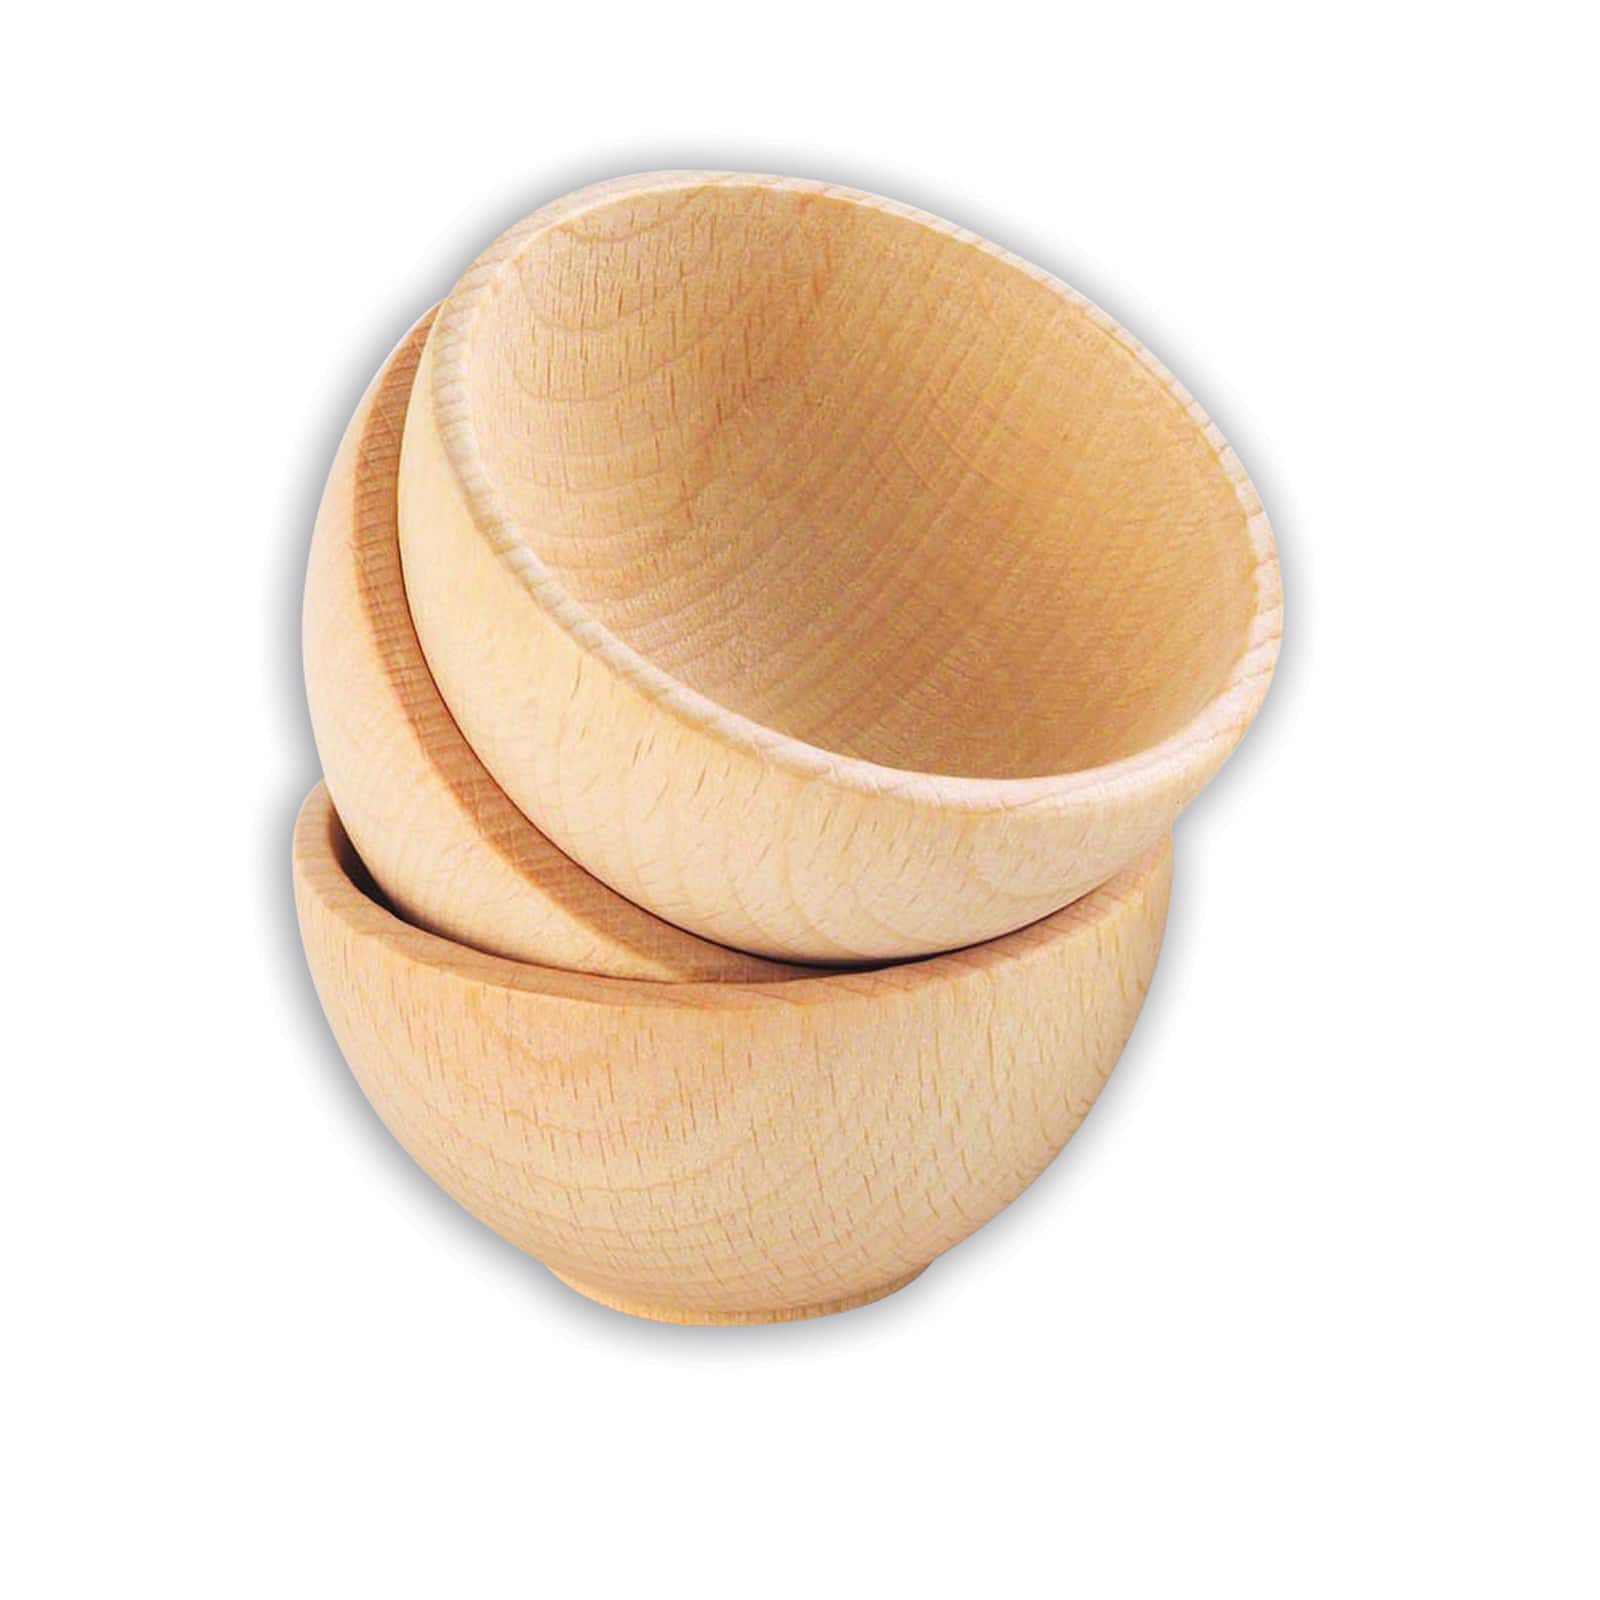 Wooden mixing bowl